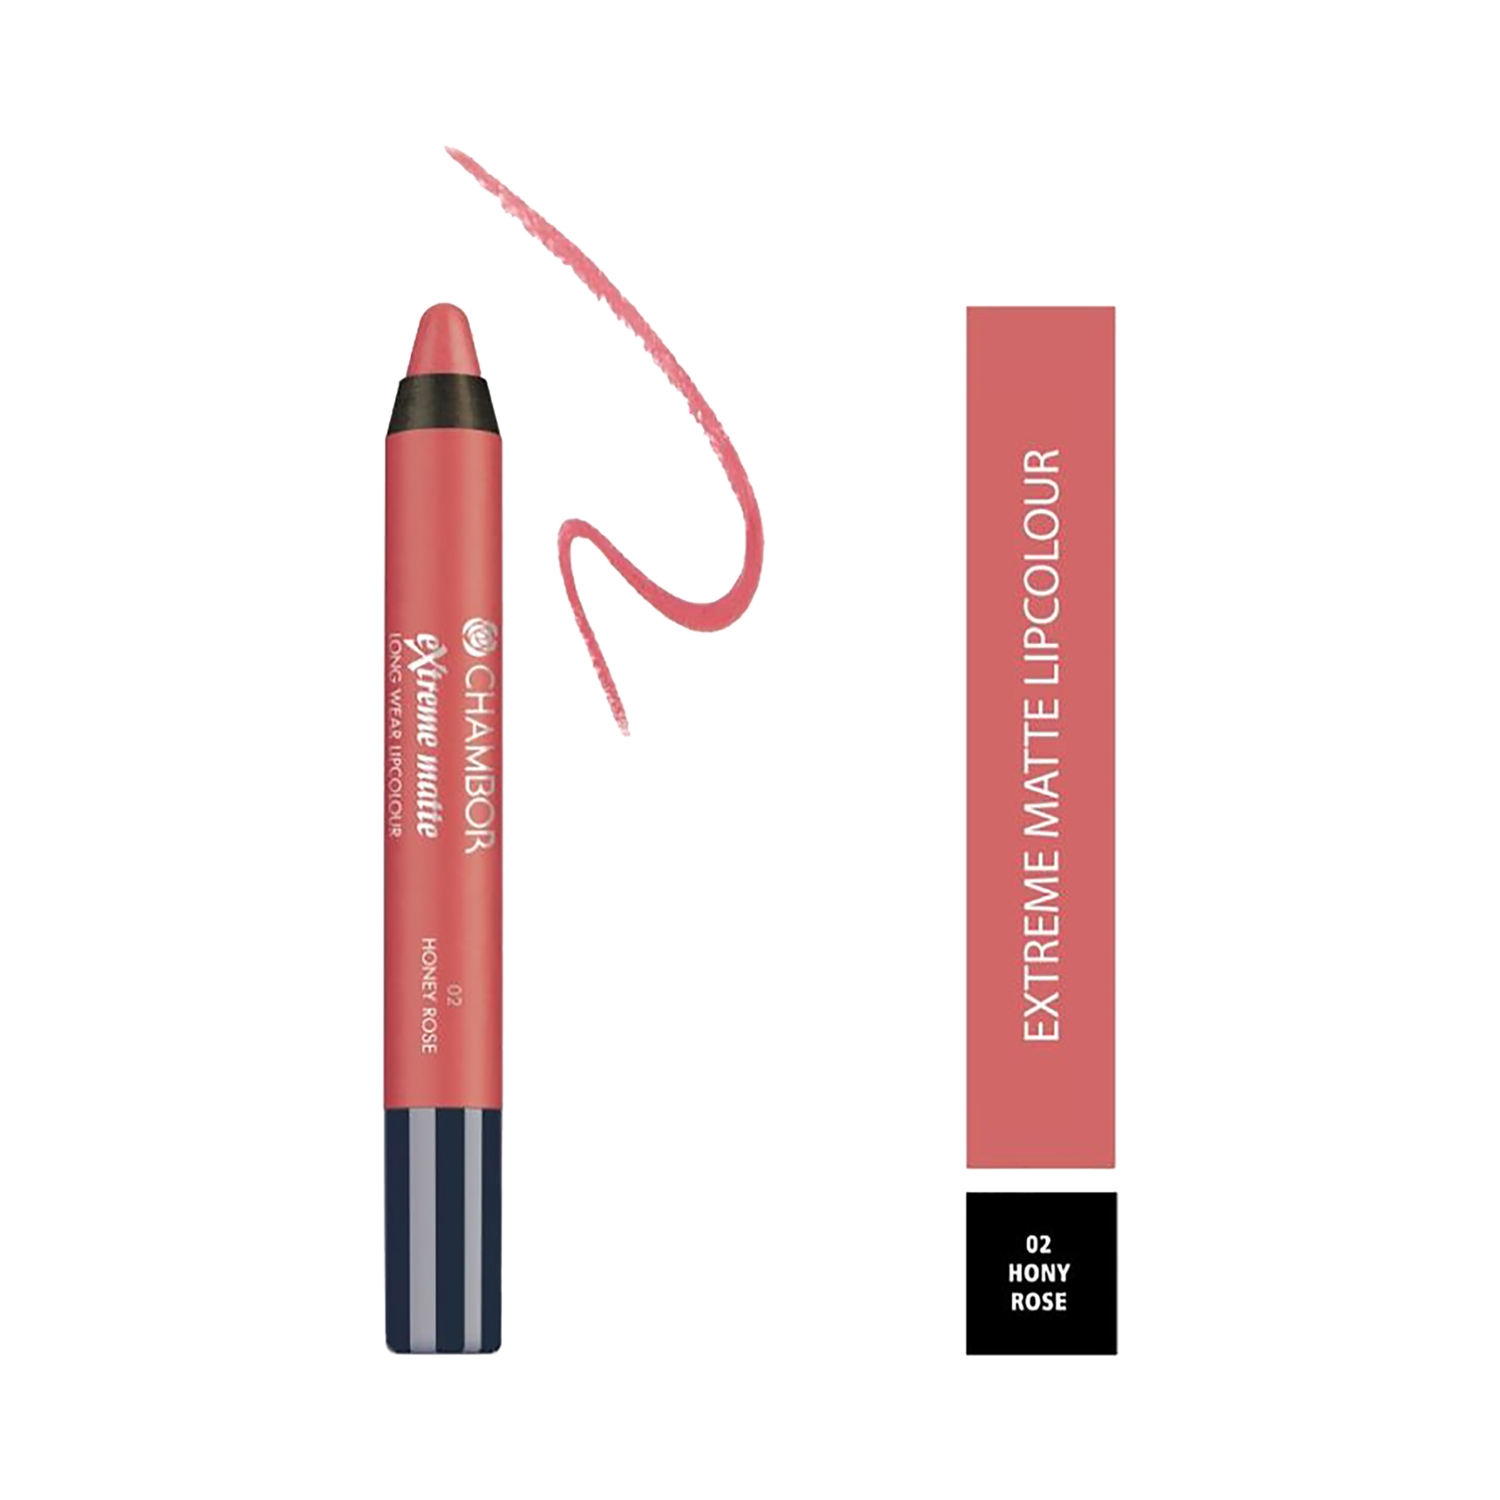 Chambor | Chambor Extreme Matte Long Wear Lip Color + Hyaluronic Acid - N 02 Honey Rose (2.8g)